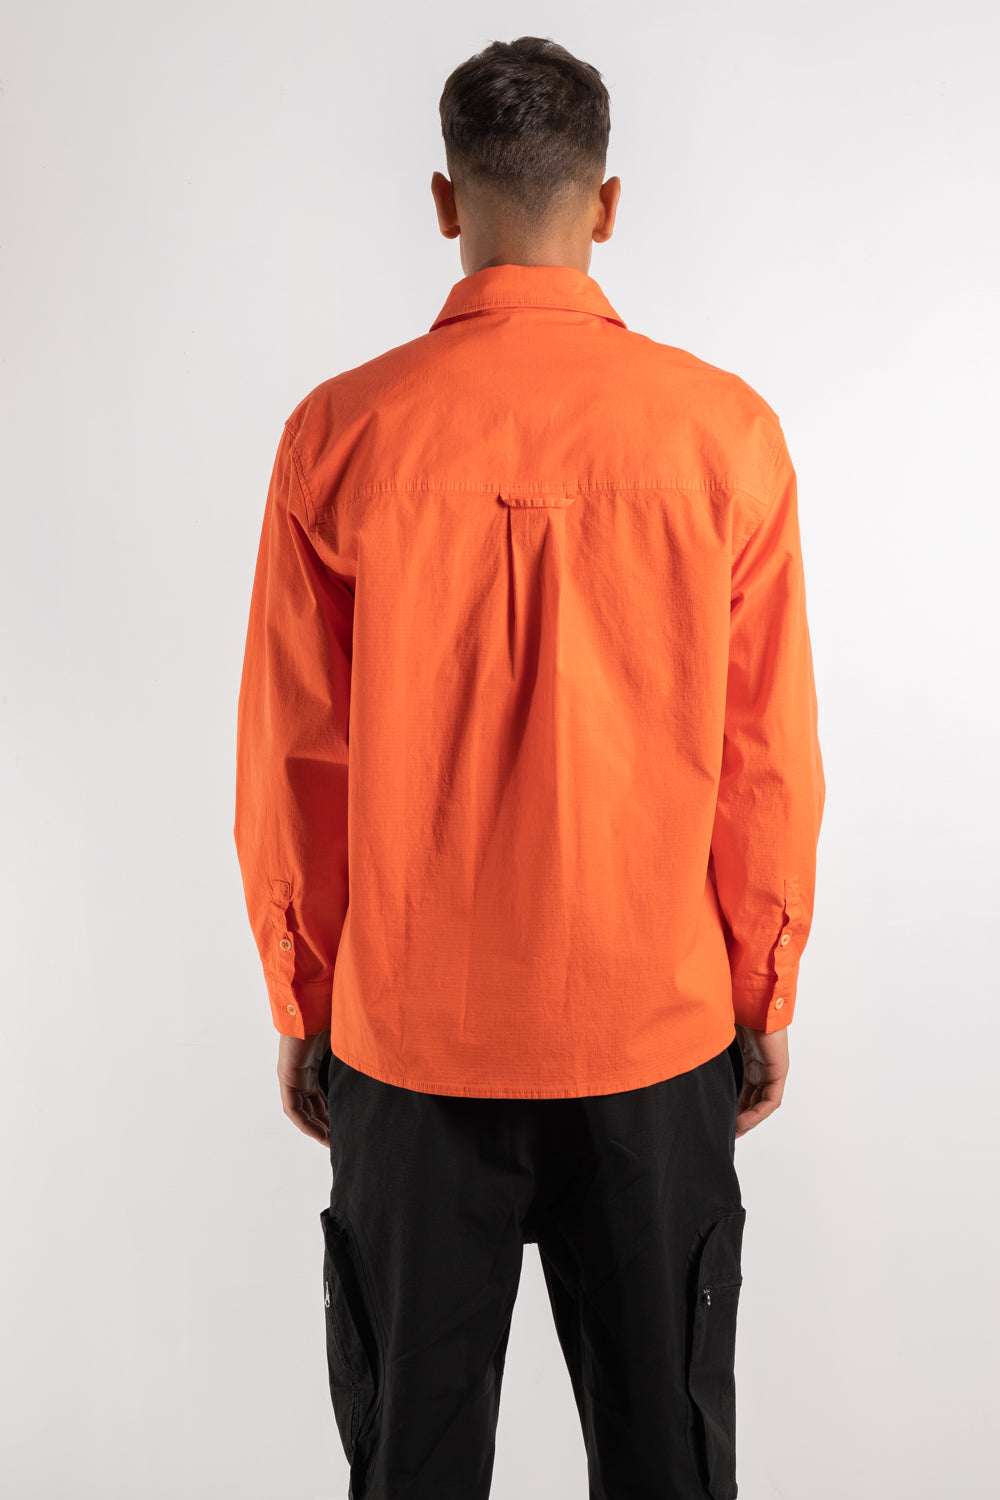 Mens Shirt | Henrik Vibskov Cargo Shirt Orange | The Standard Store